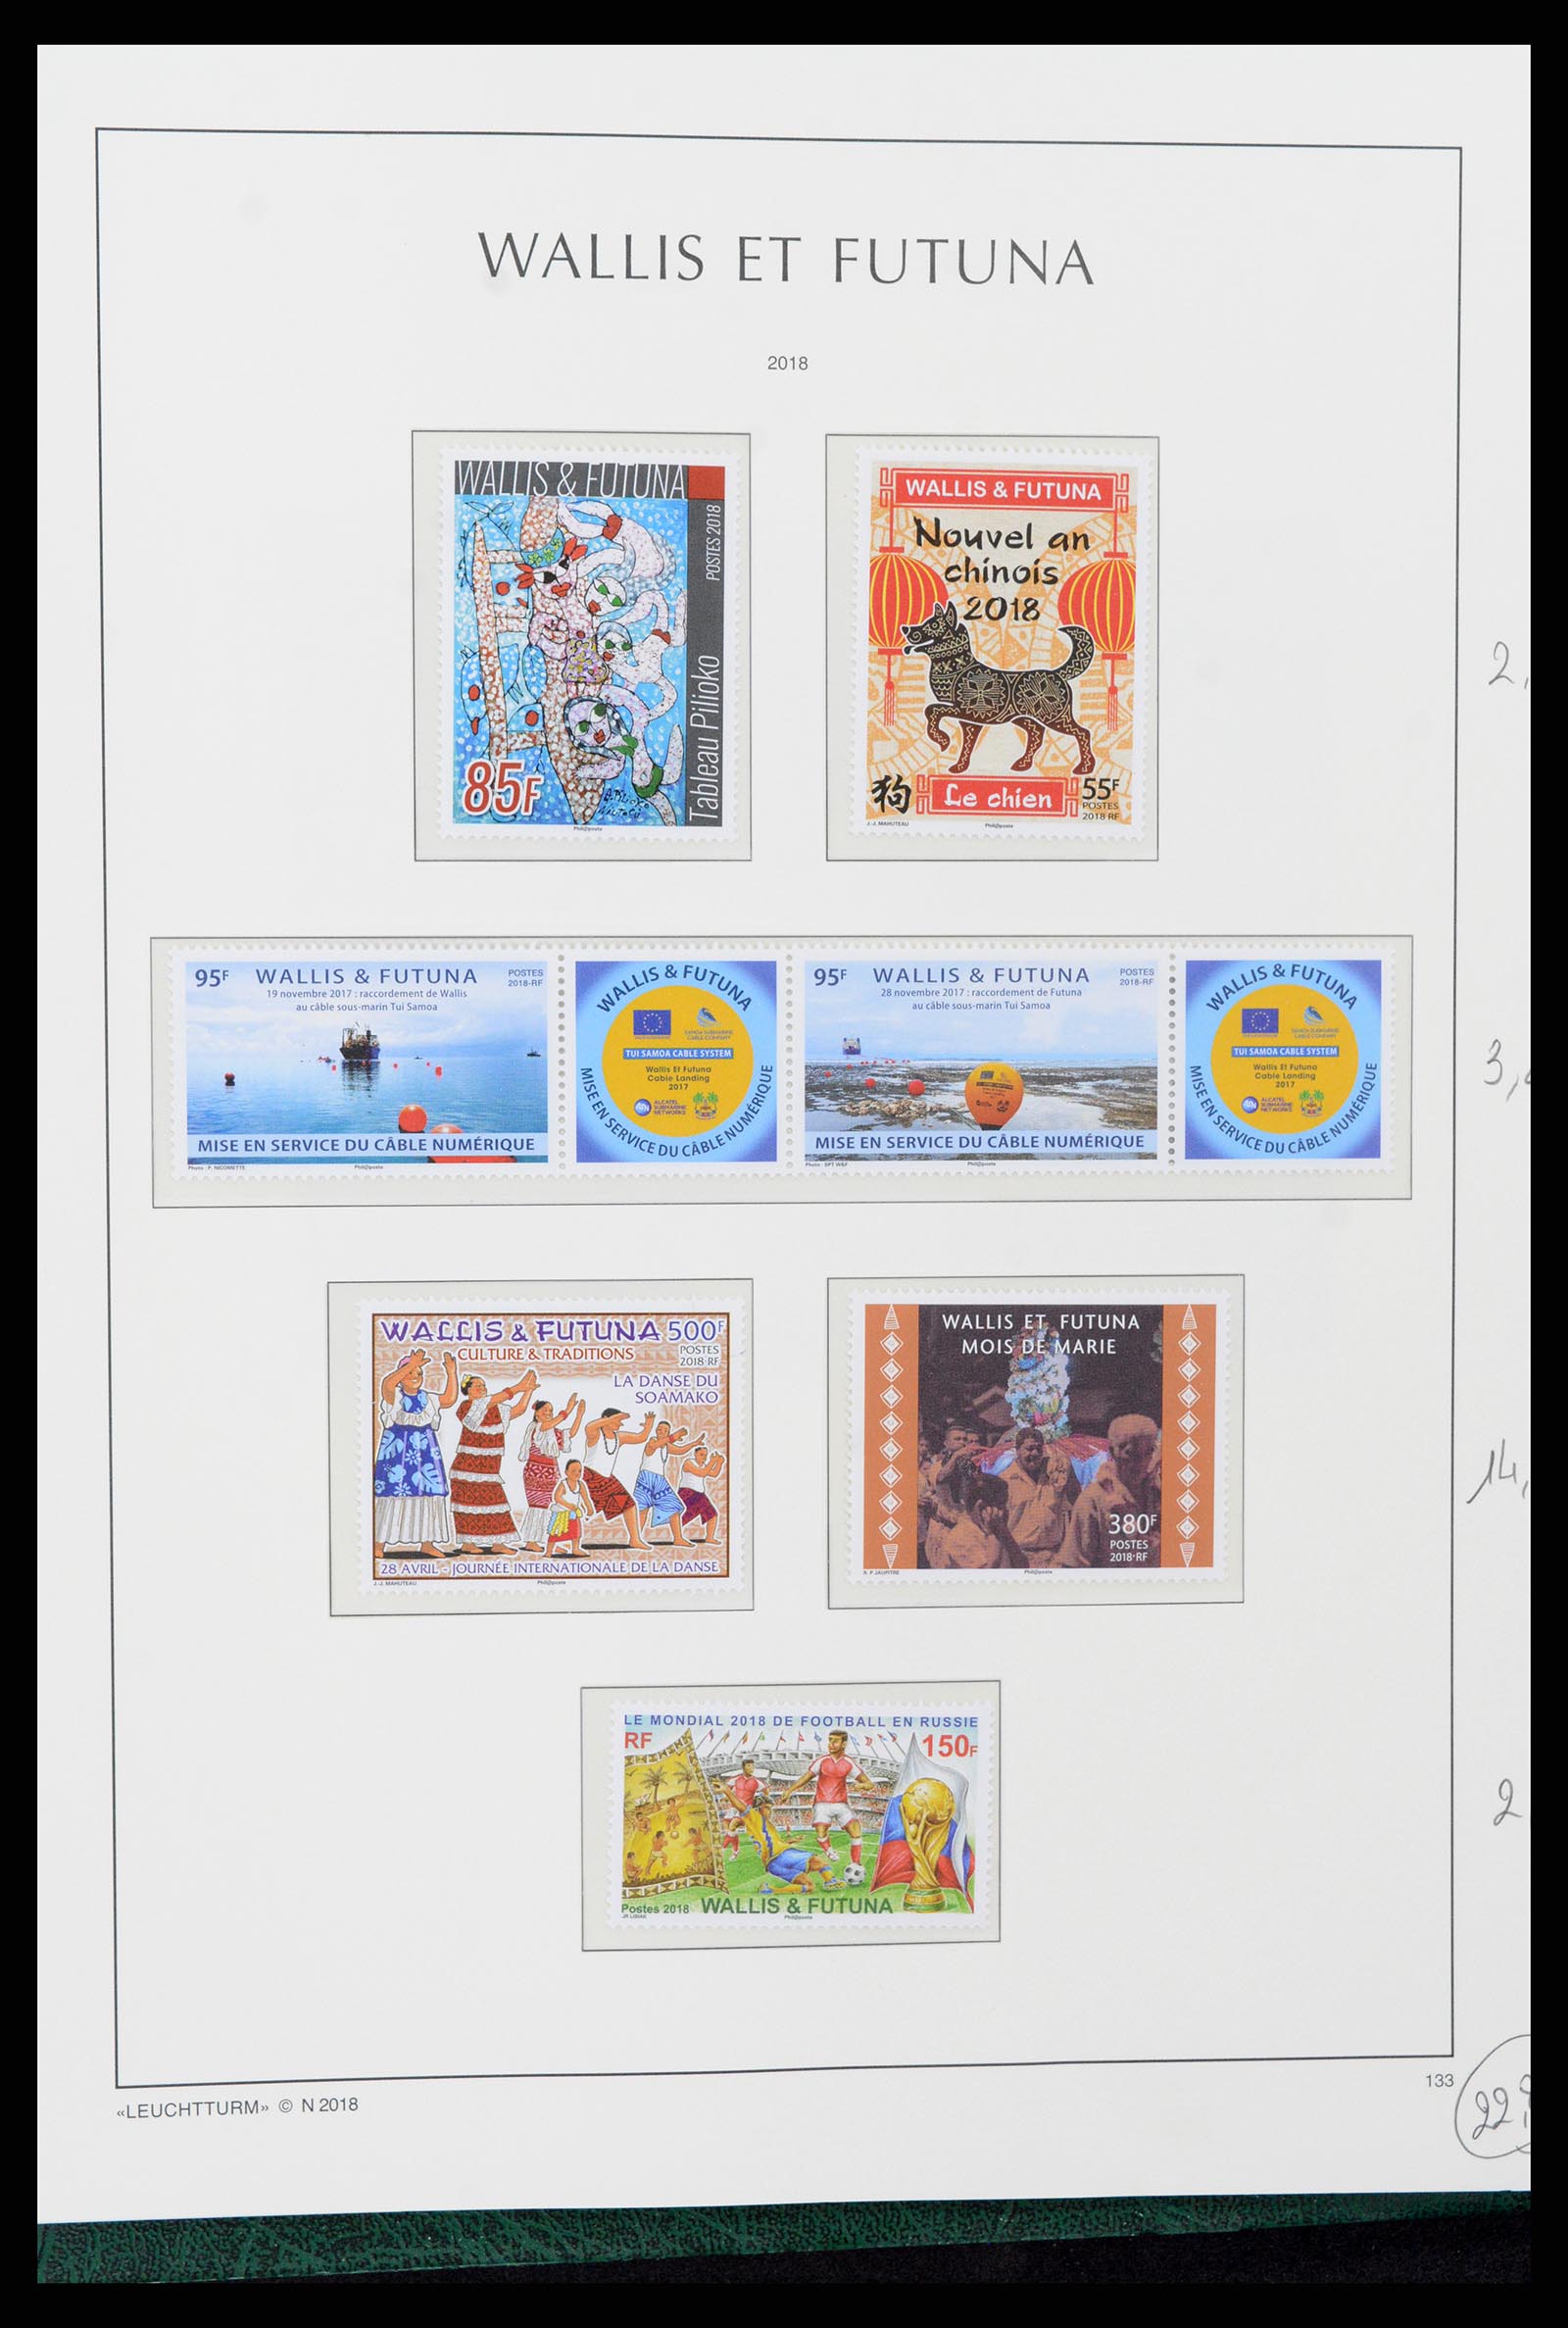 37316 100 - Stamp collection 37316 Wallis et Futuna 1980-2018!